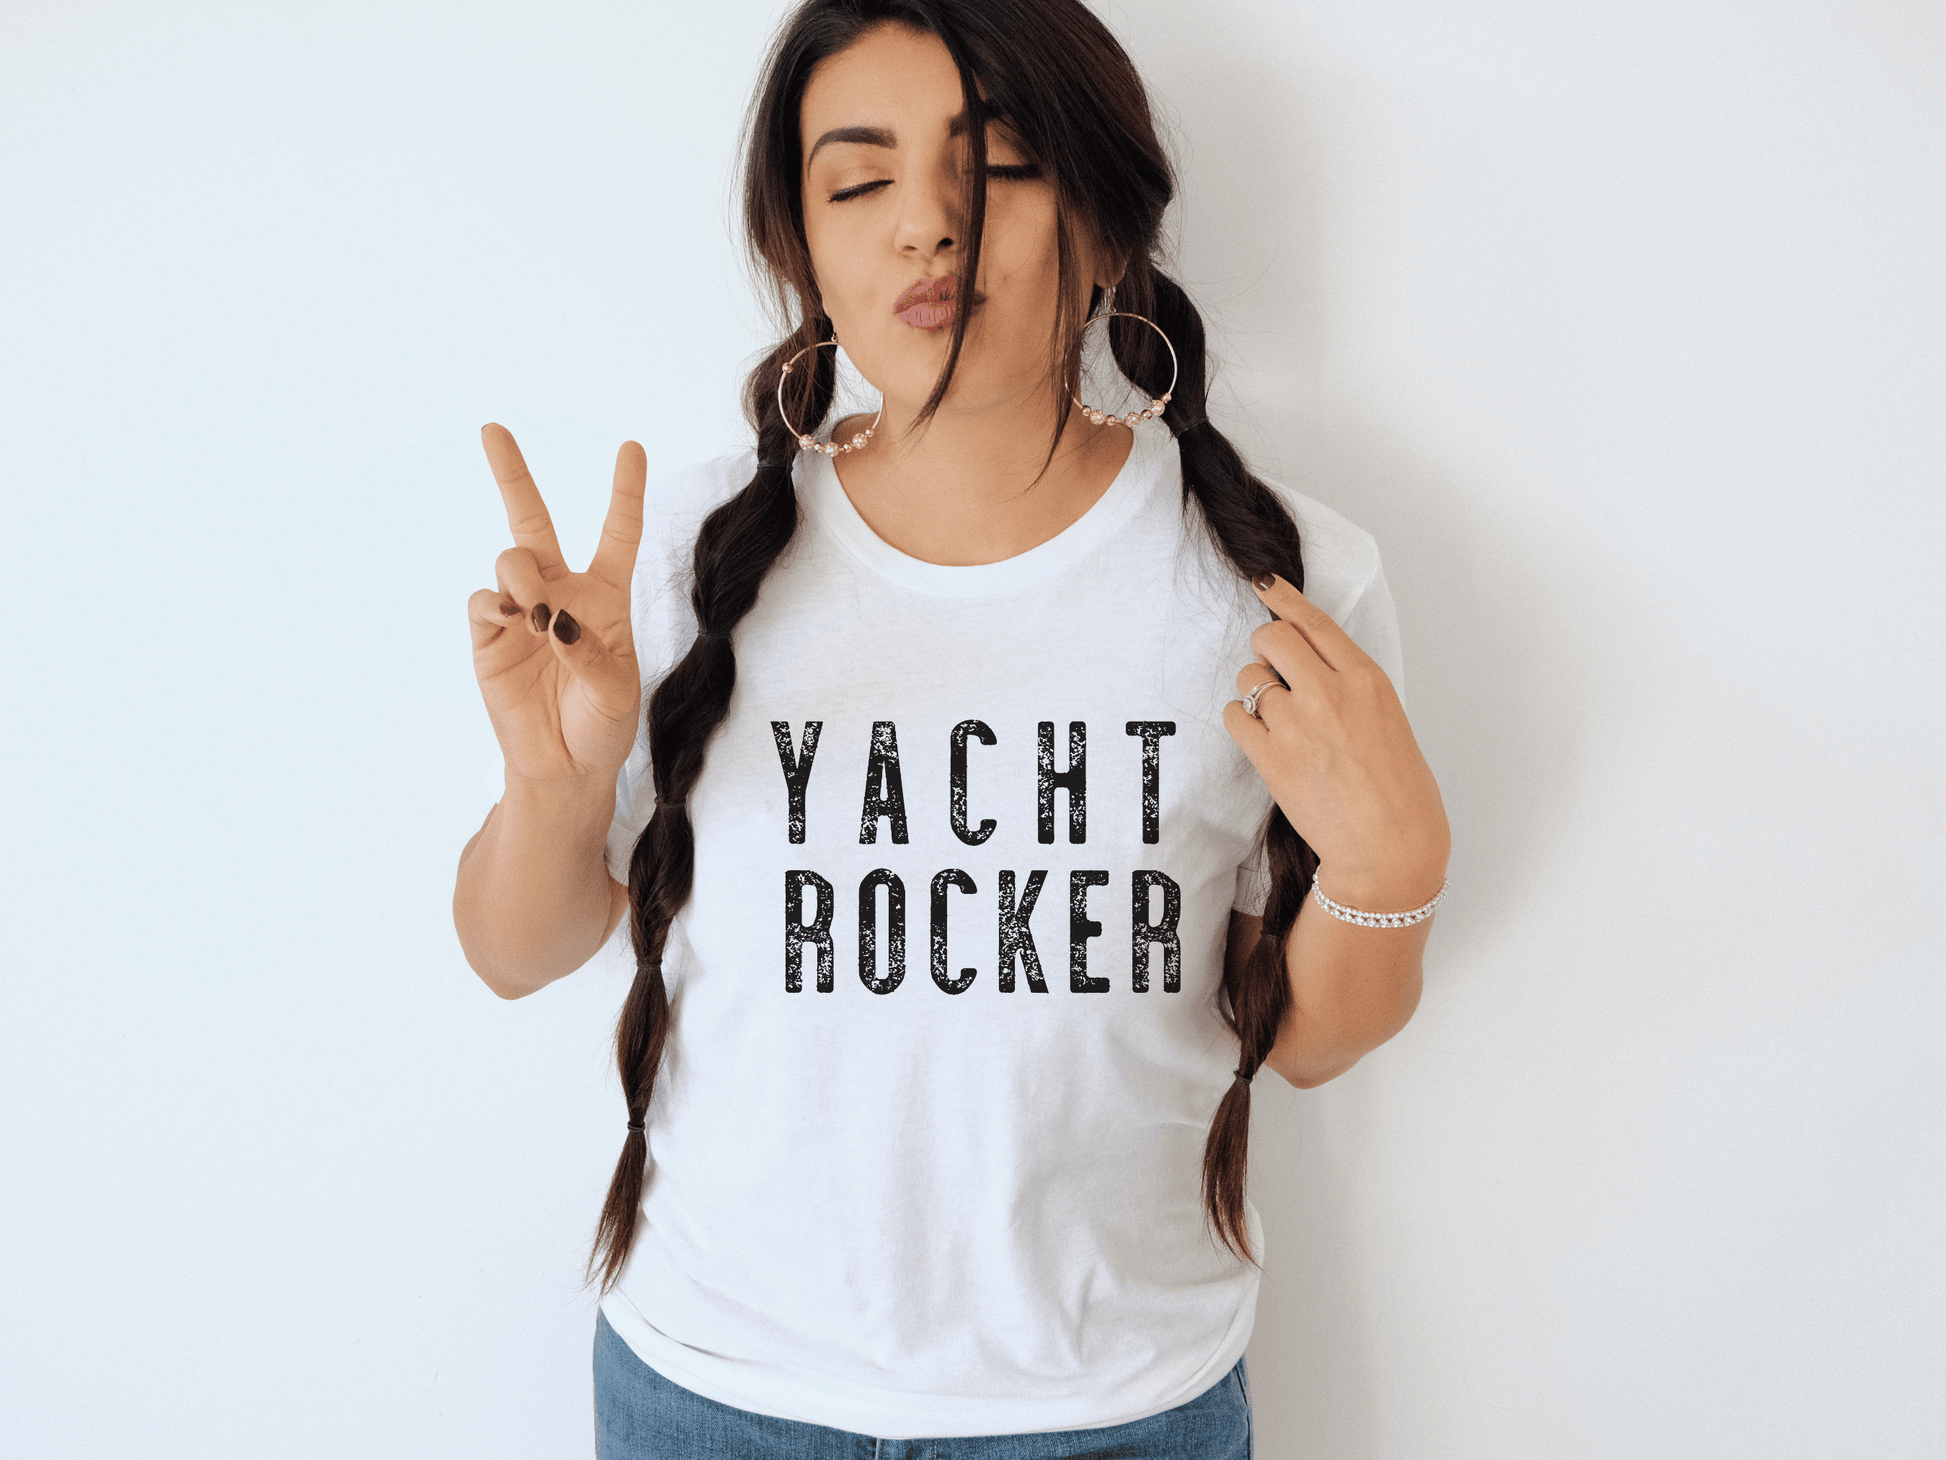 Yacht Rocker T-Shirt in White